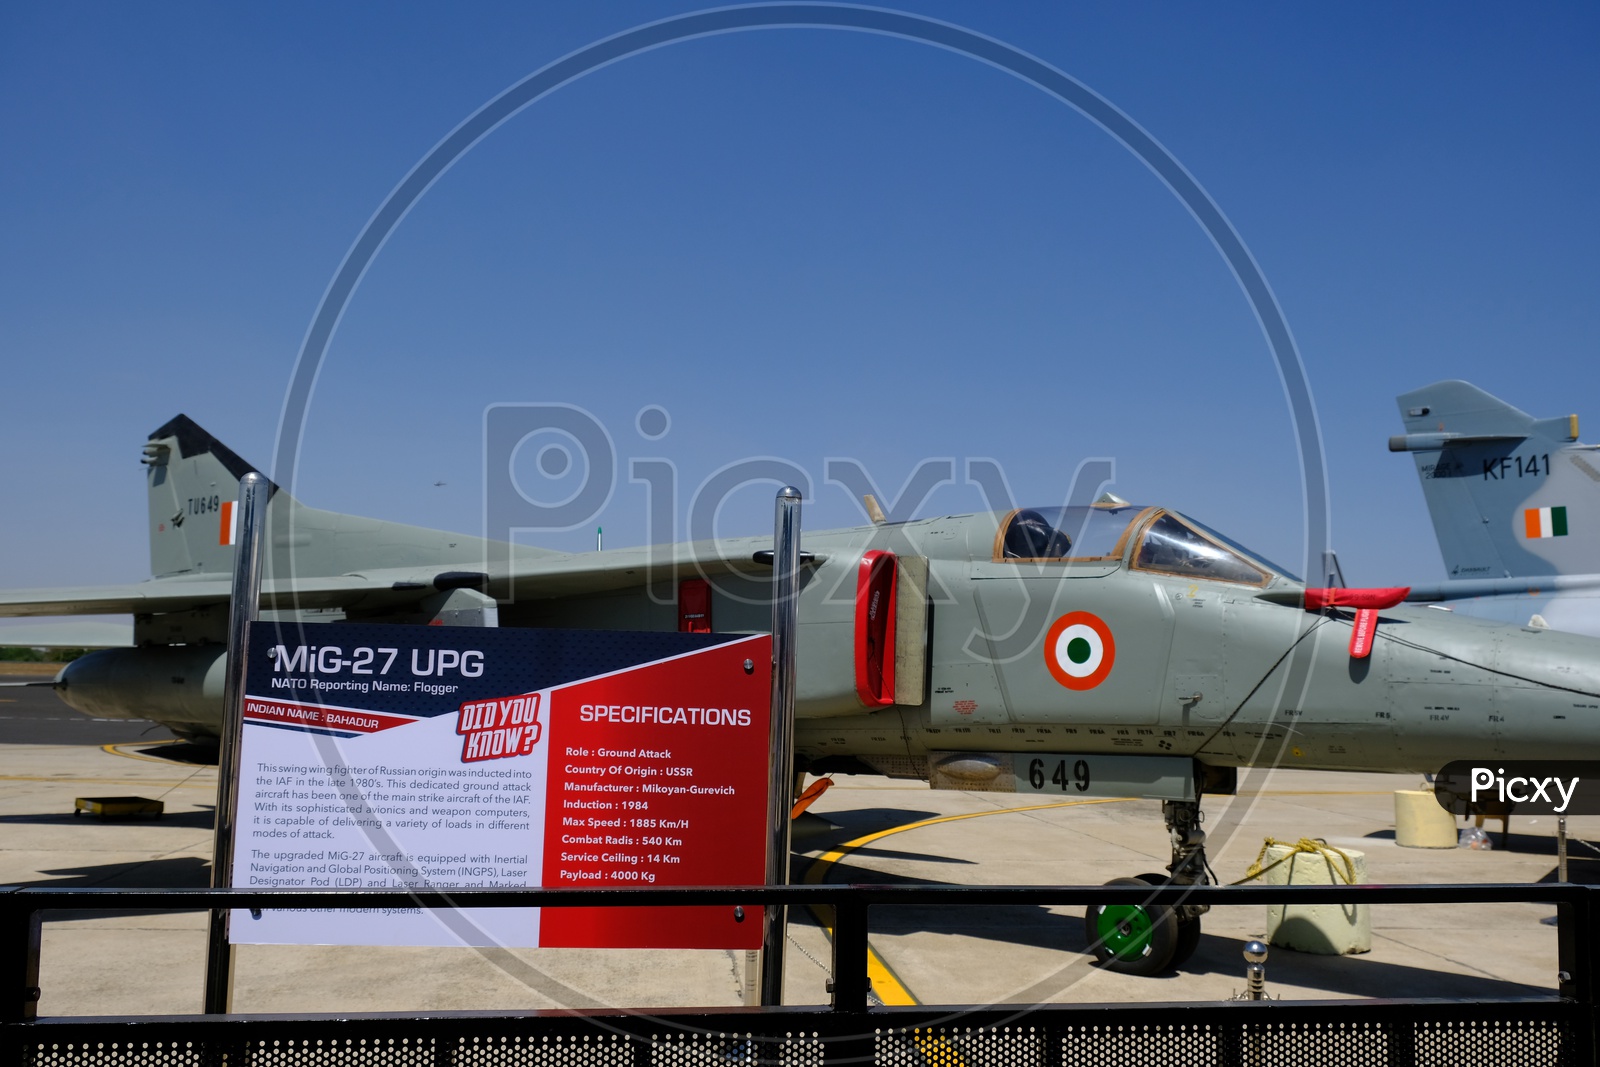 Indian Air Force Mig-27 UPG at Bangalore Aero India 2019